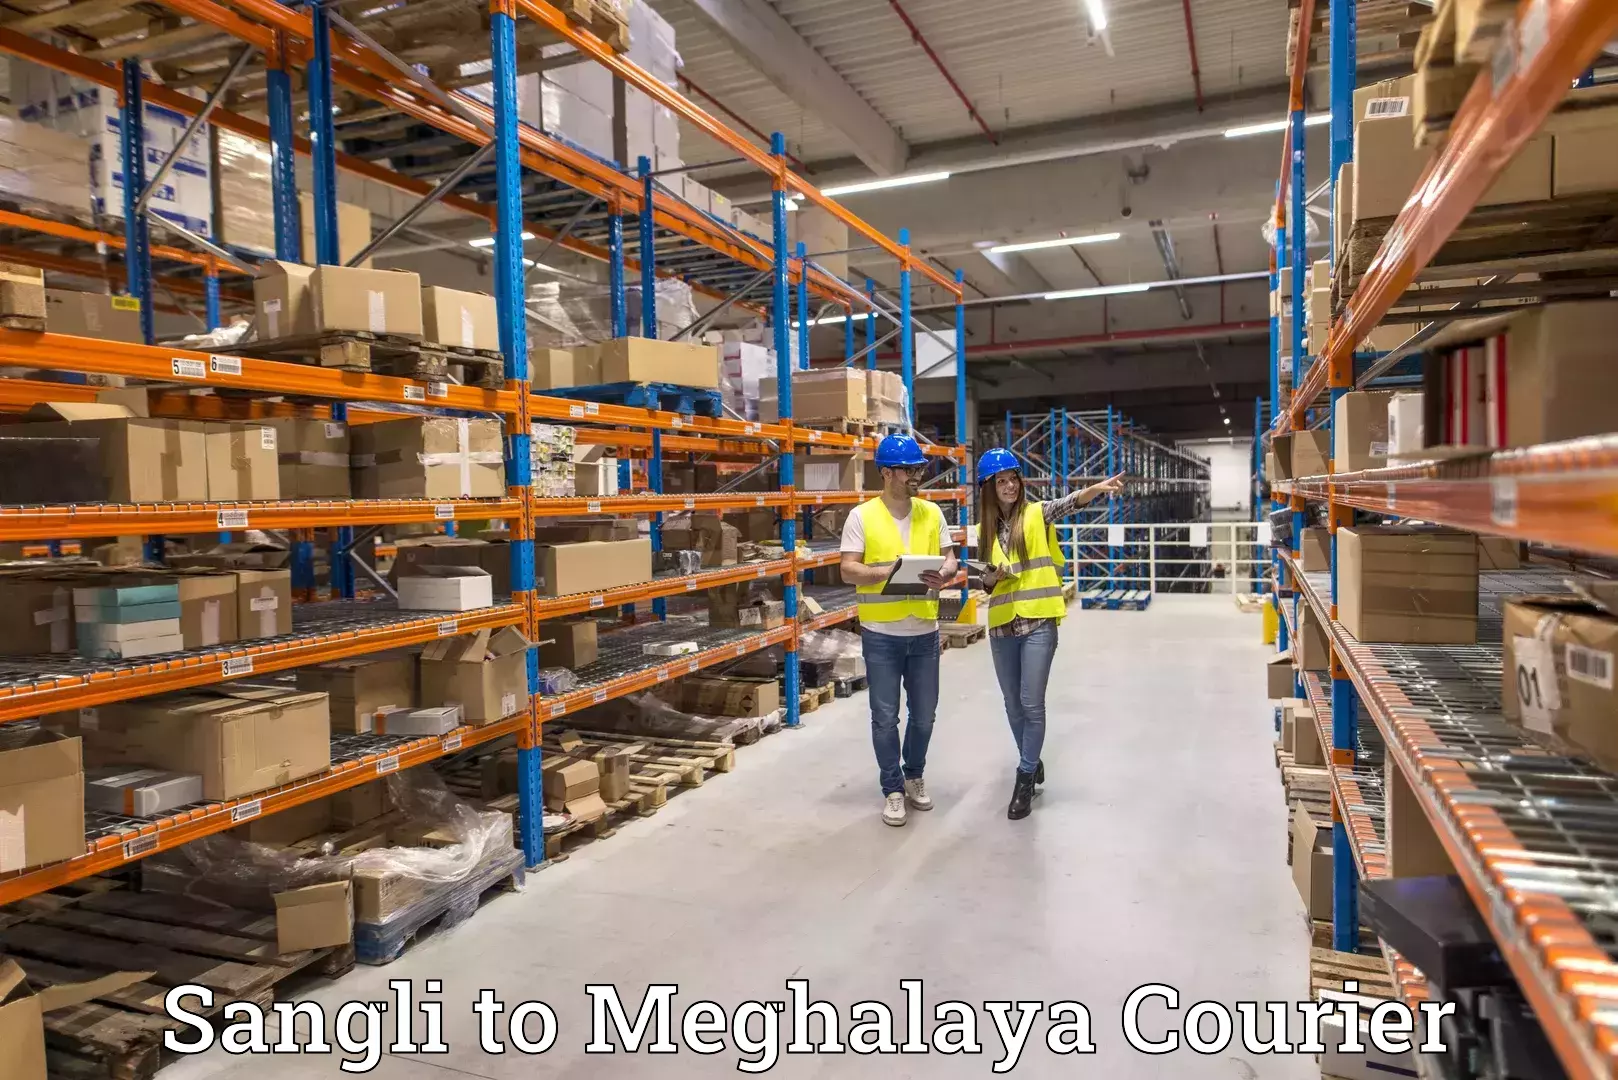 Global courier networks Sangli to Meghalaya